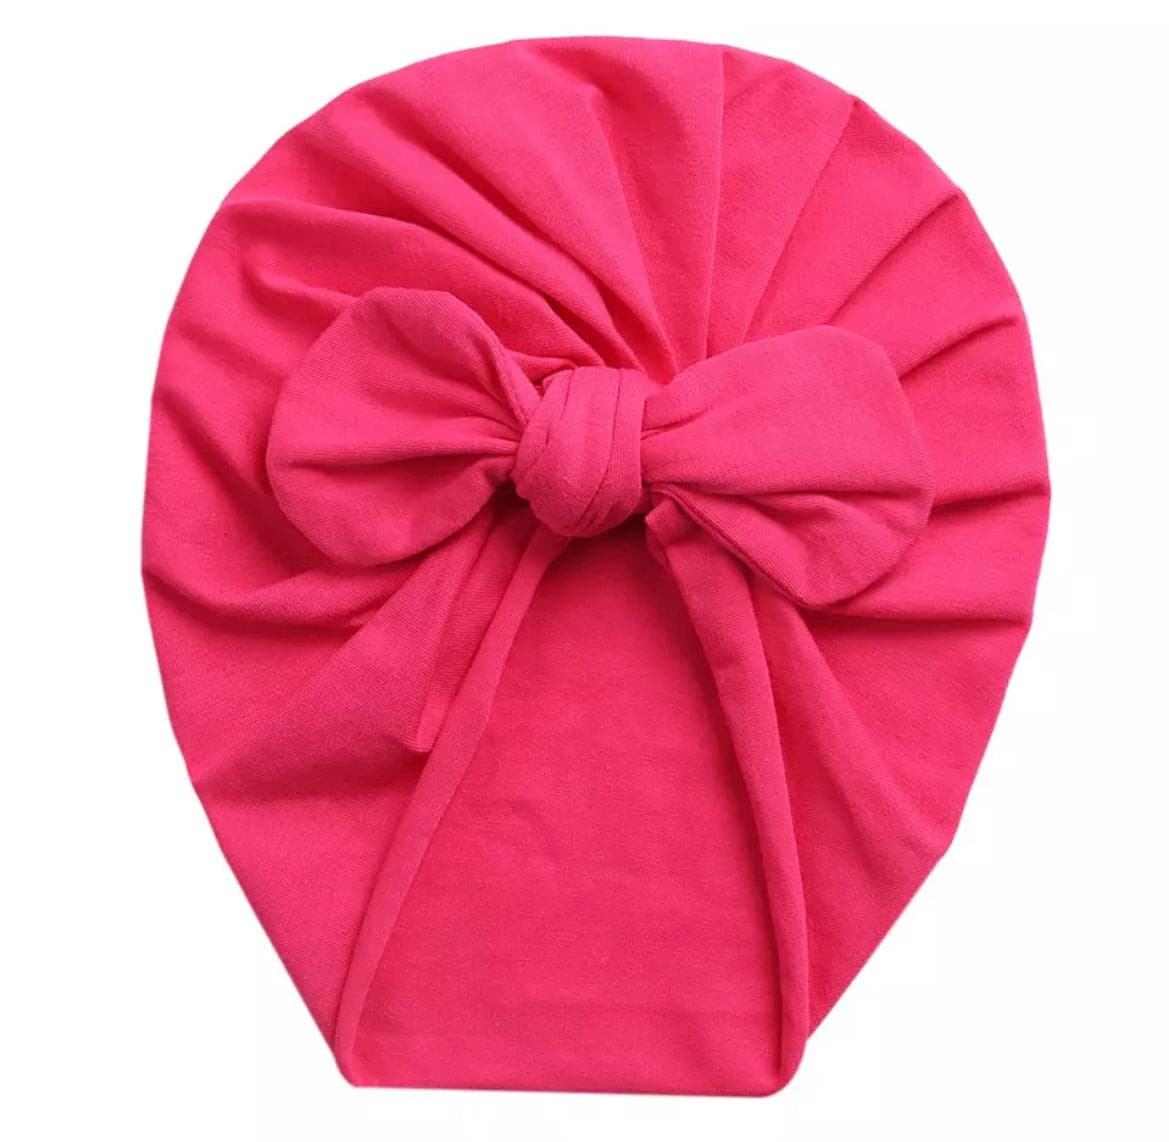 Pure Cotton Bow Turban.